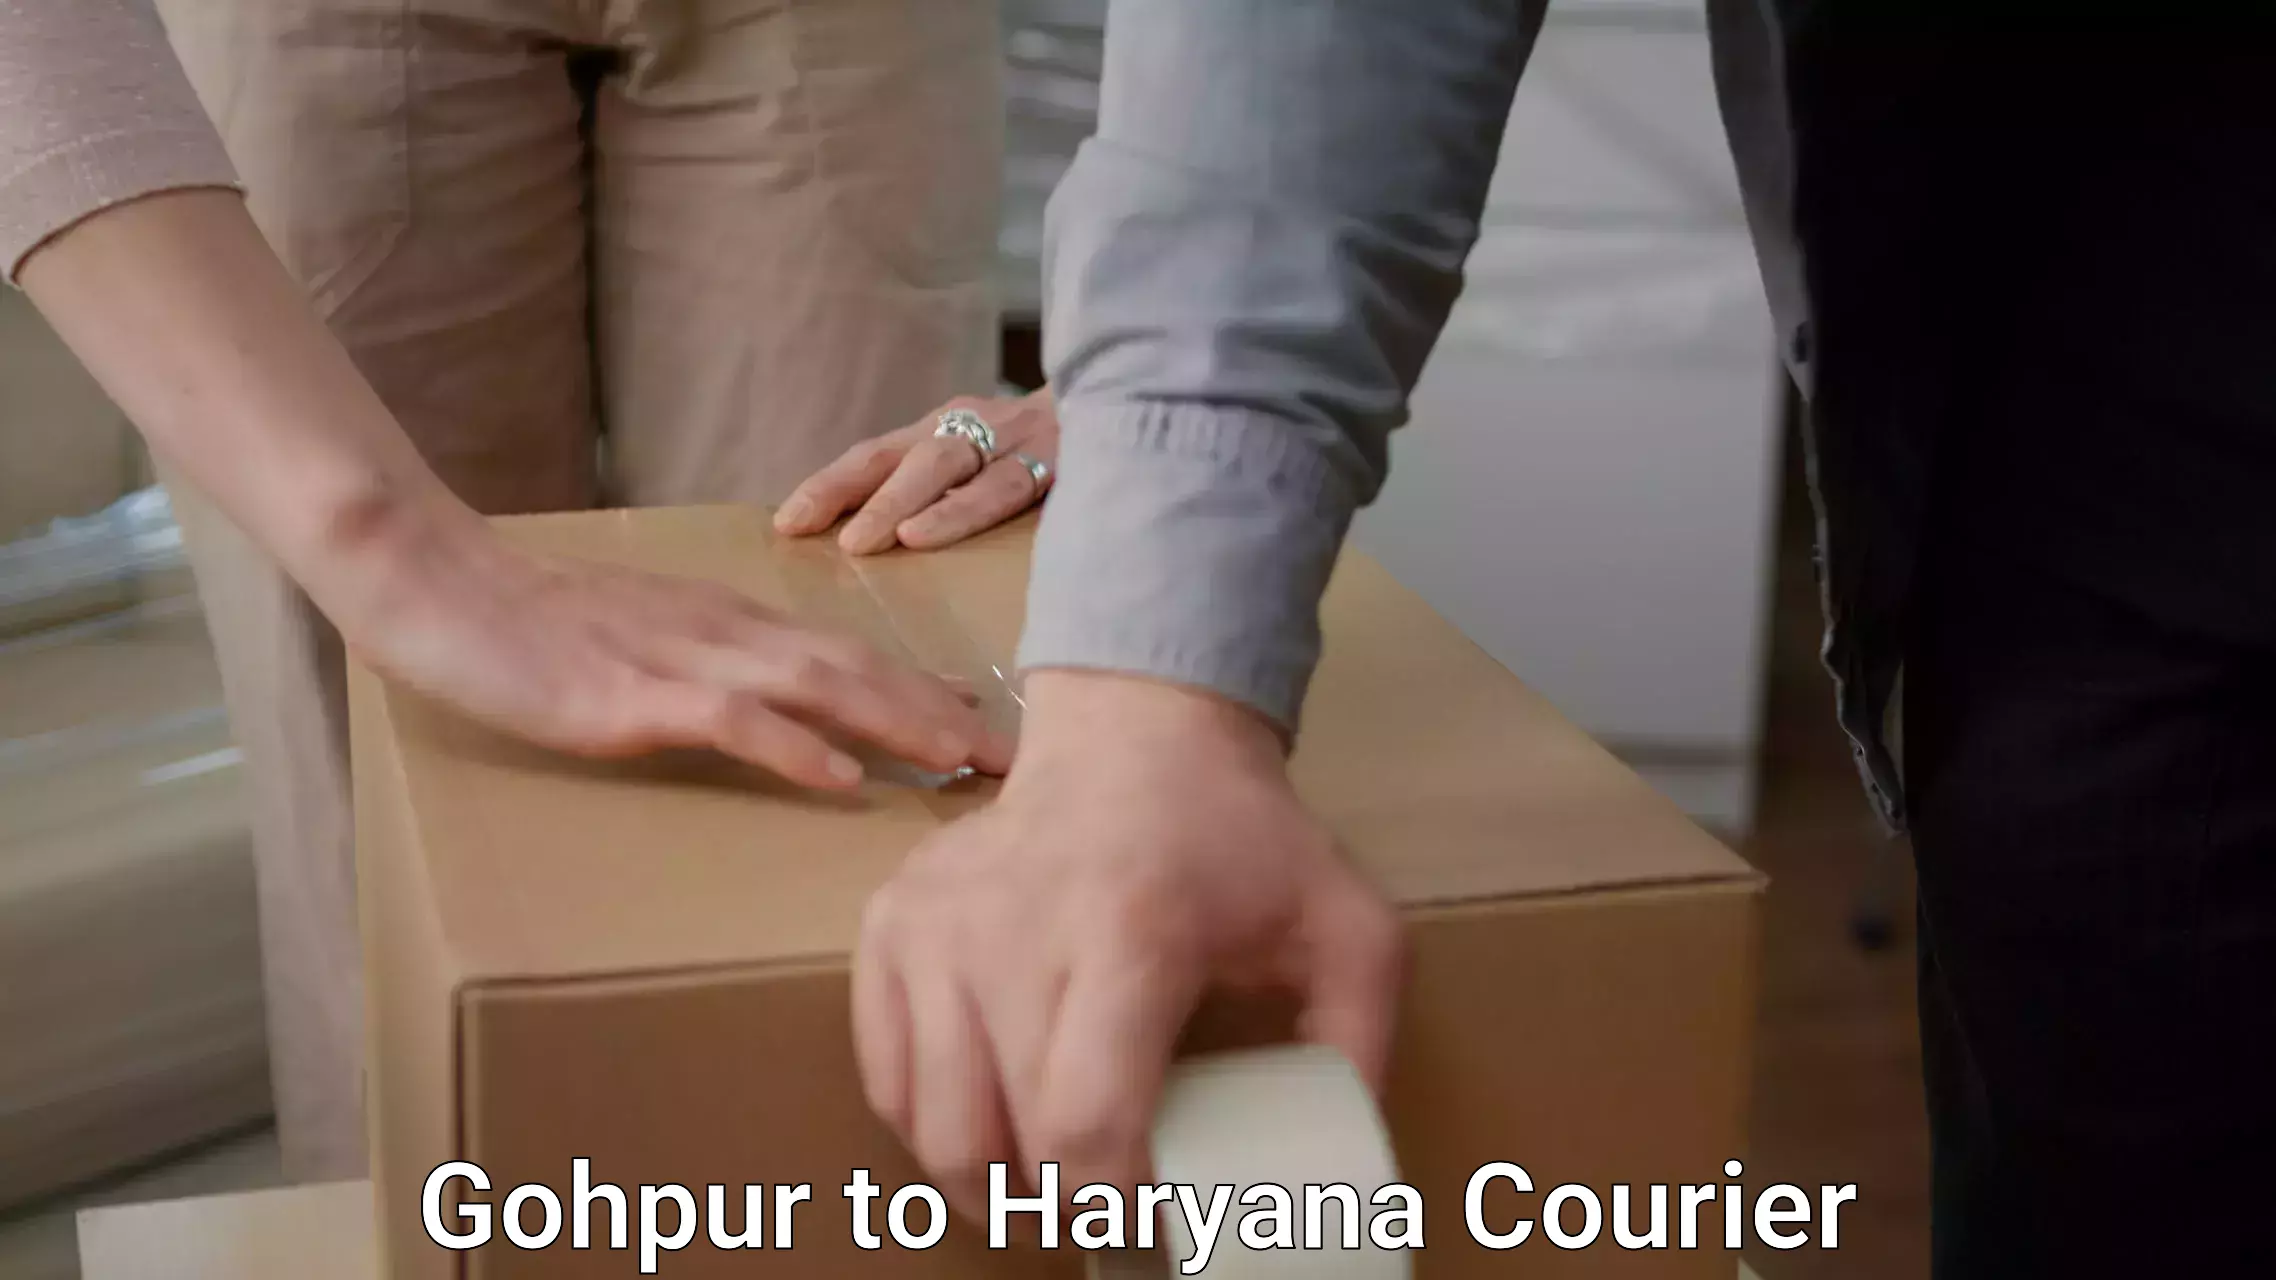 Professional moving company Gohpur to Panchkula